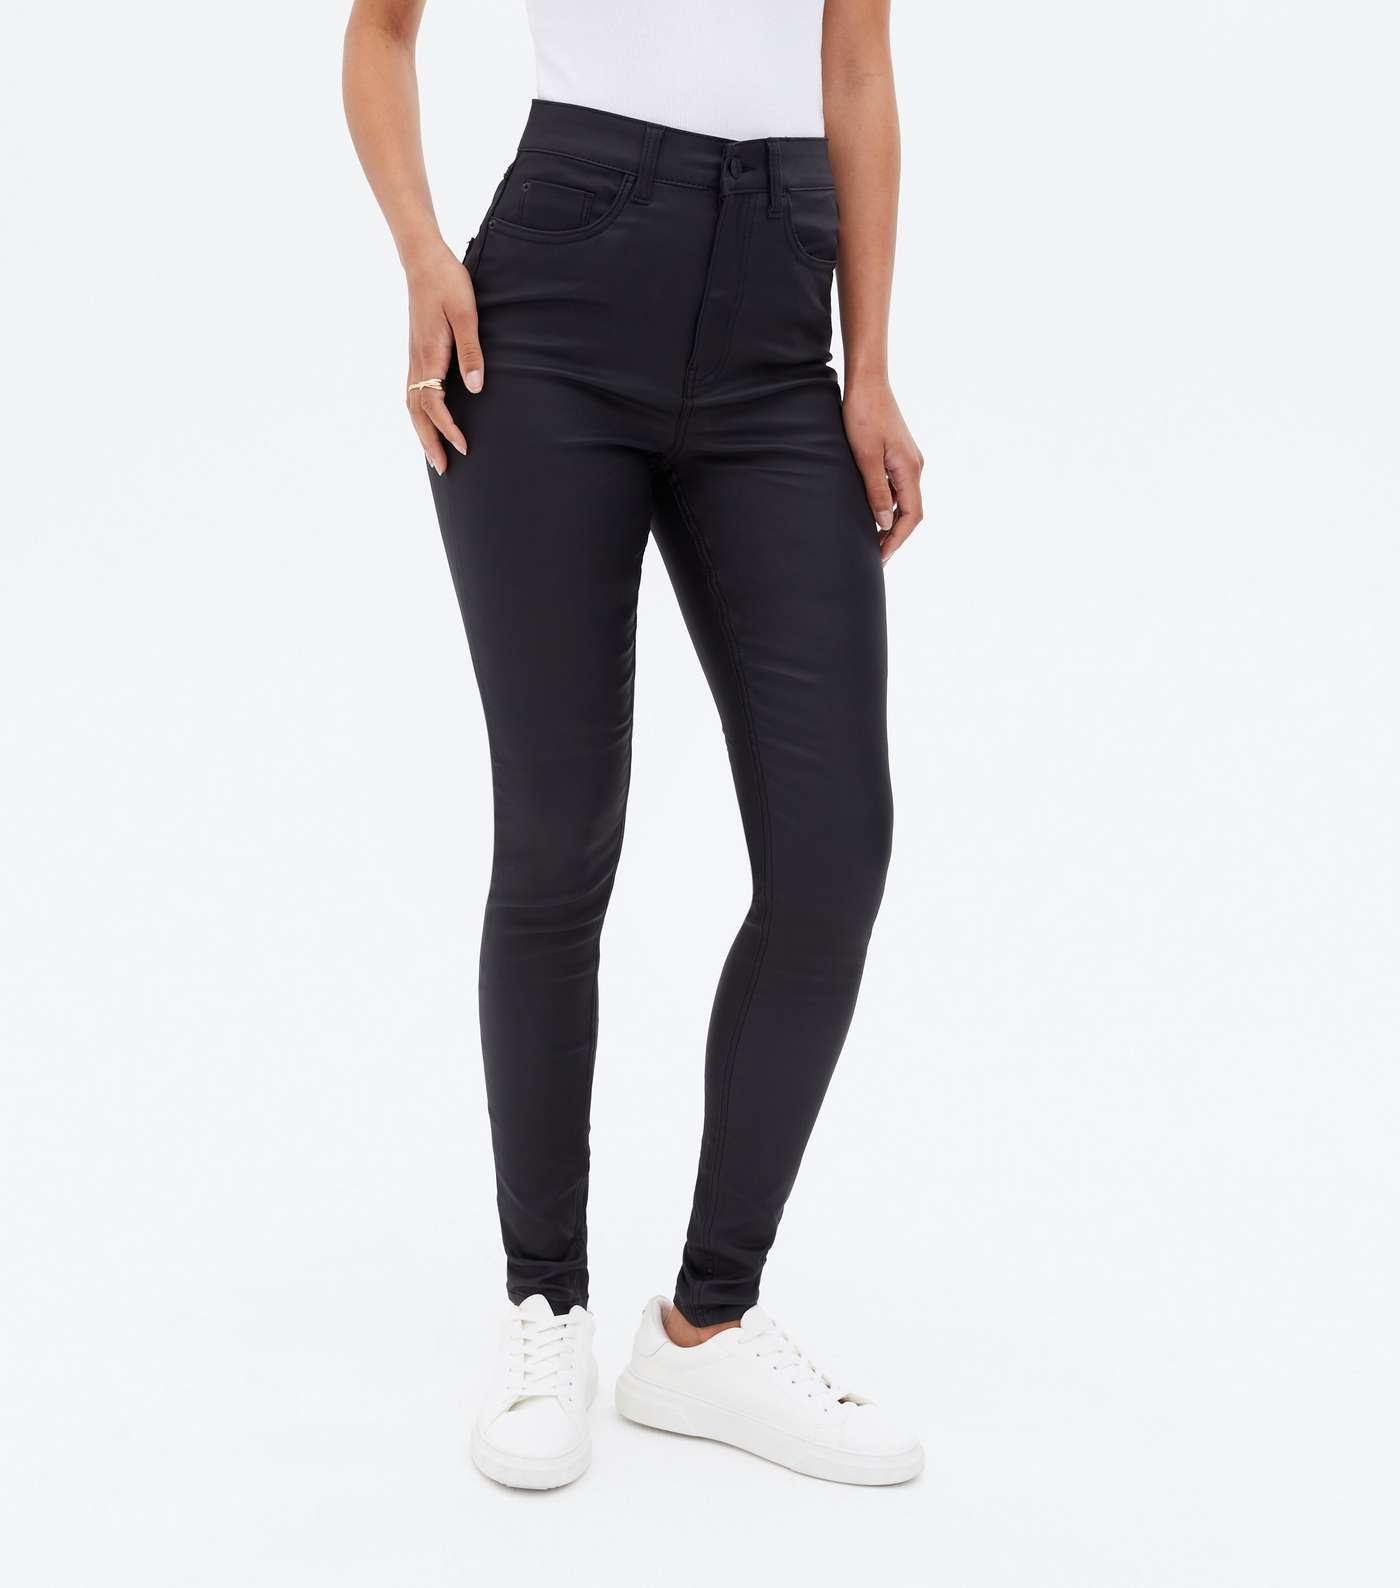 Tall Black Leather-Look Lift & Shape Jenna Skinny Jeans Image 2